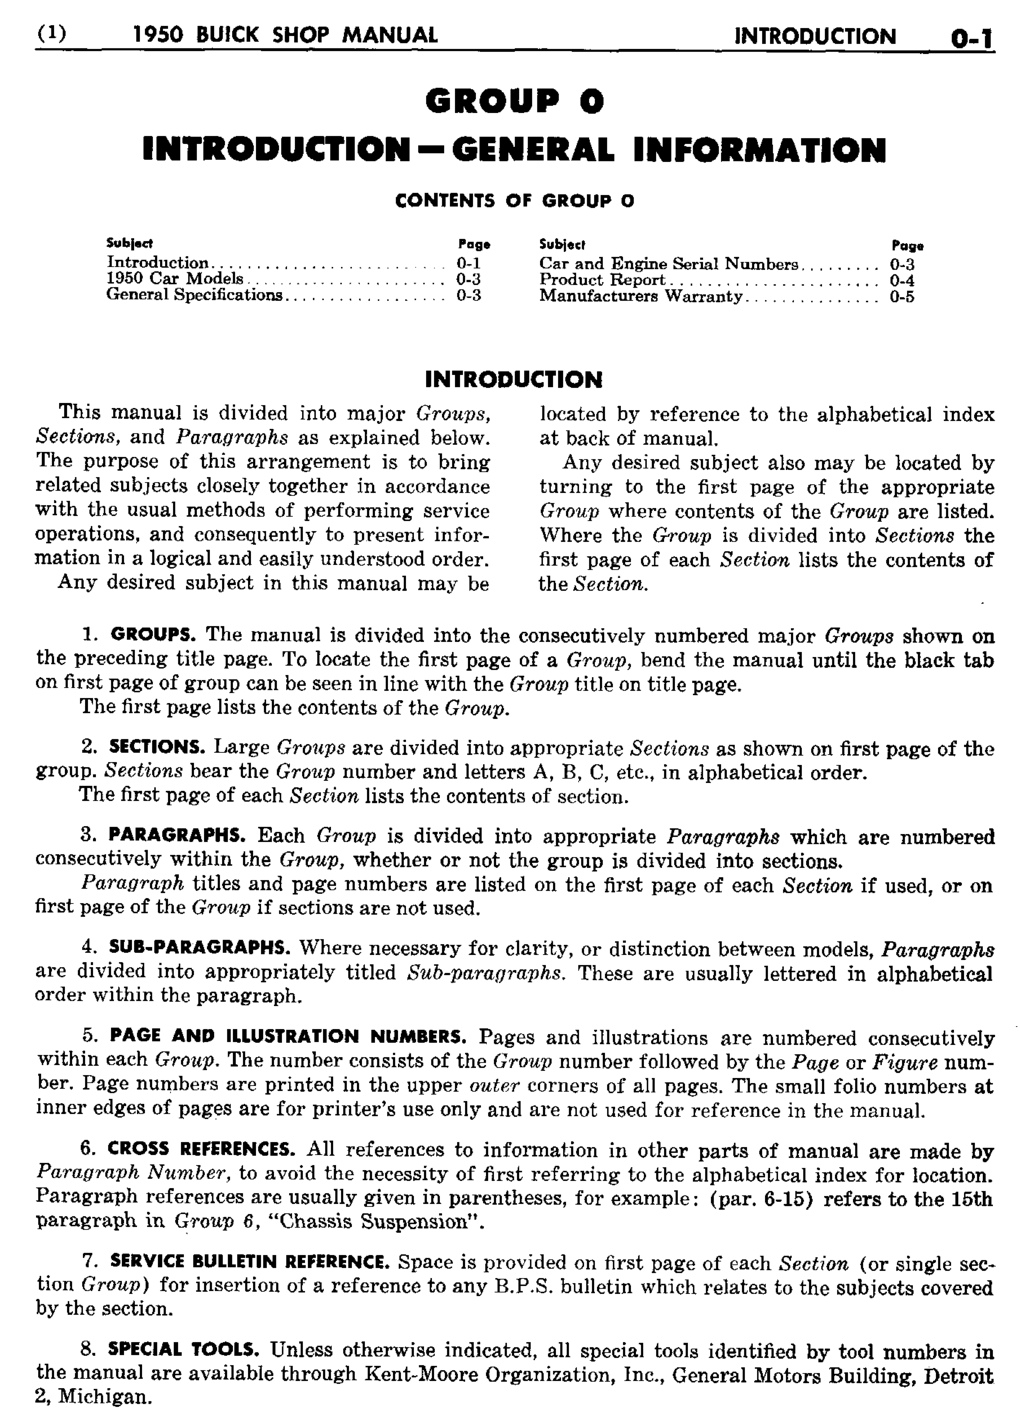 n_01 1950 Buick Shop Manual - Gen Information-003-003.jpg